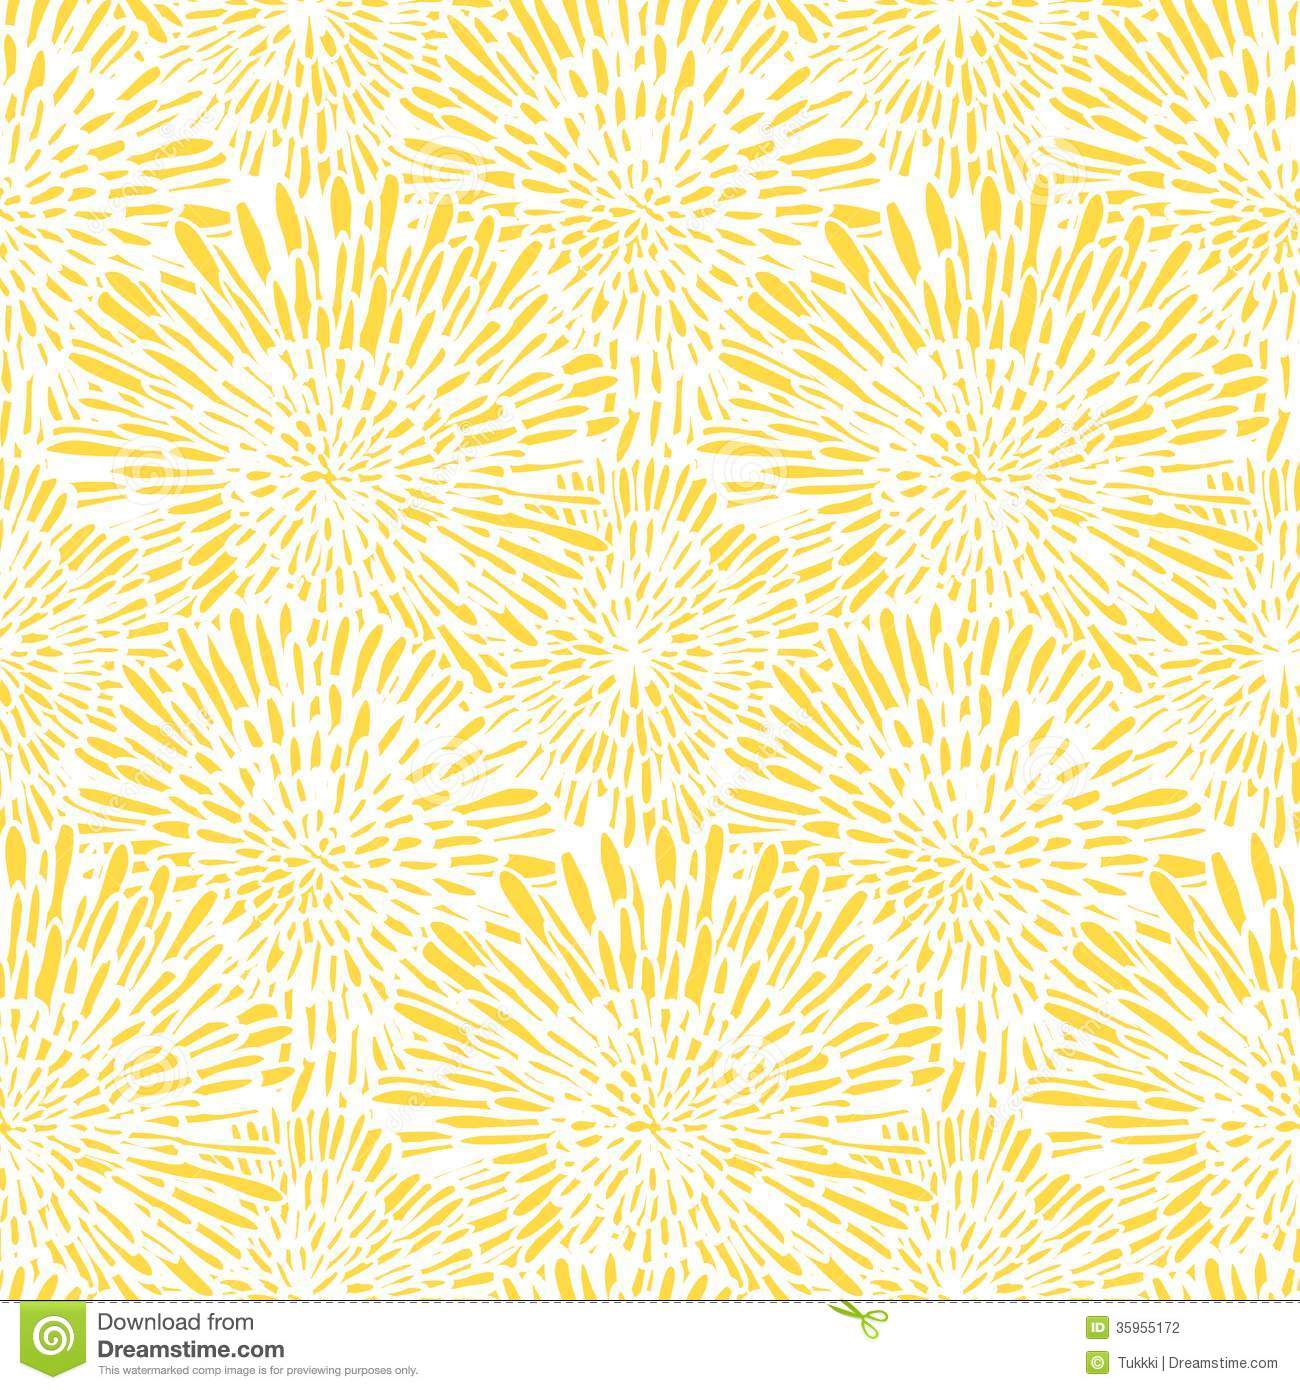 44+] Style of the Yellow Wallpaper - WallpaperSafari